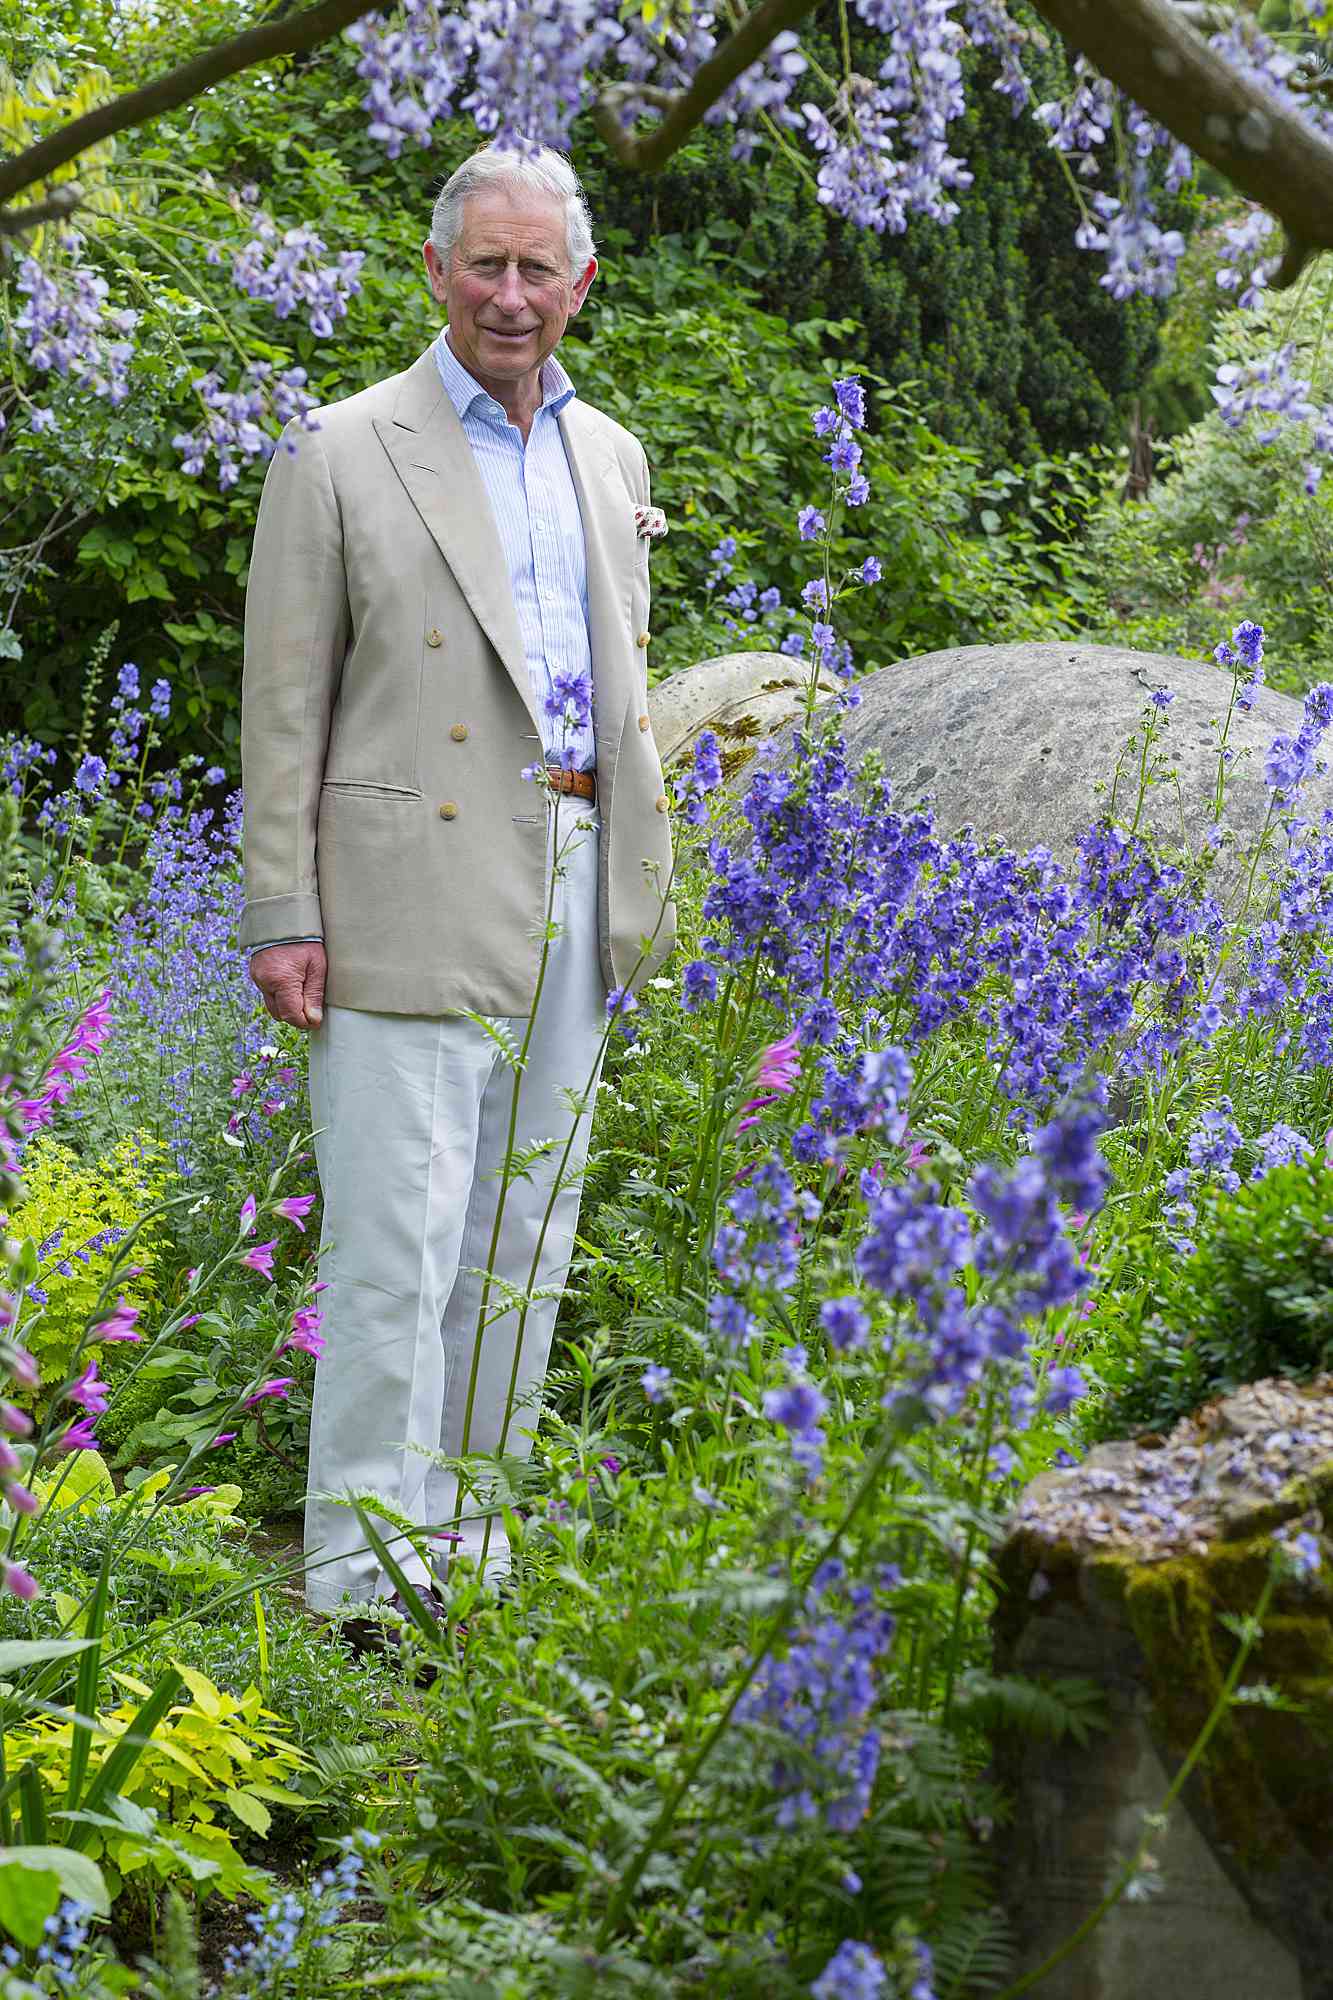 Highgrove Garden's 25th anniversar